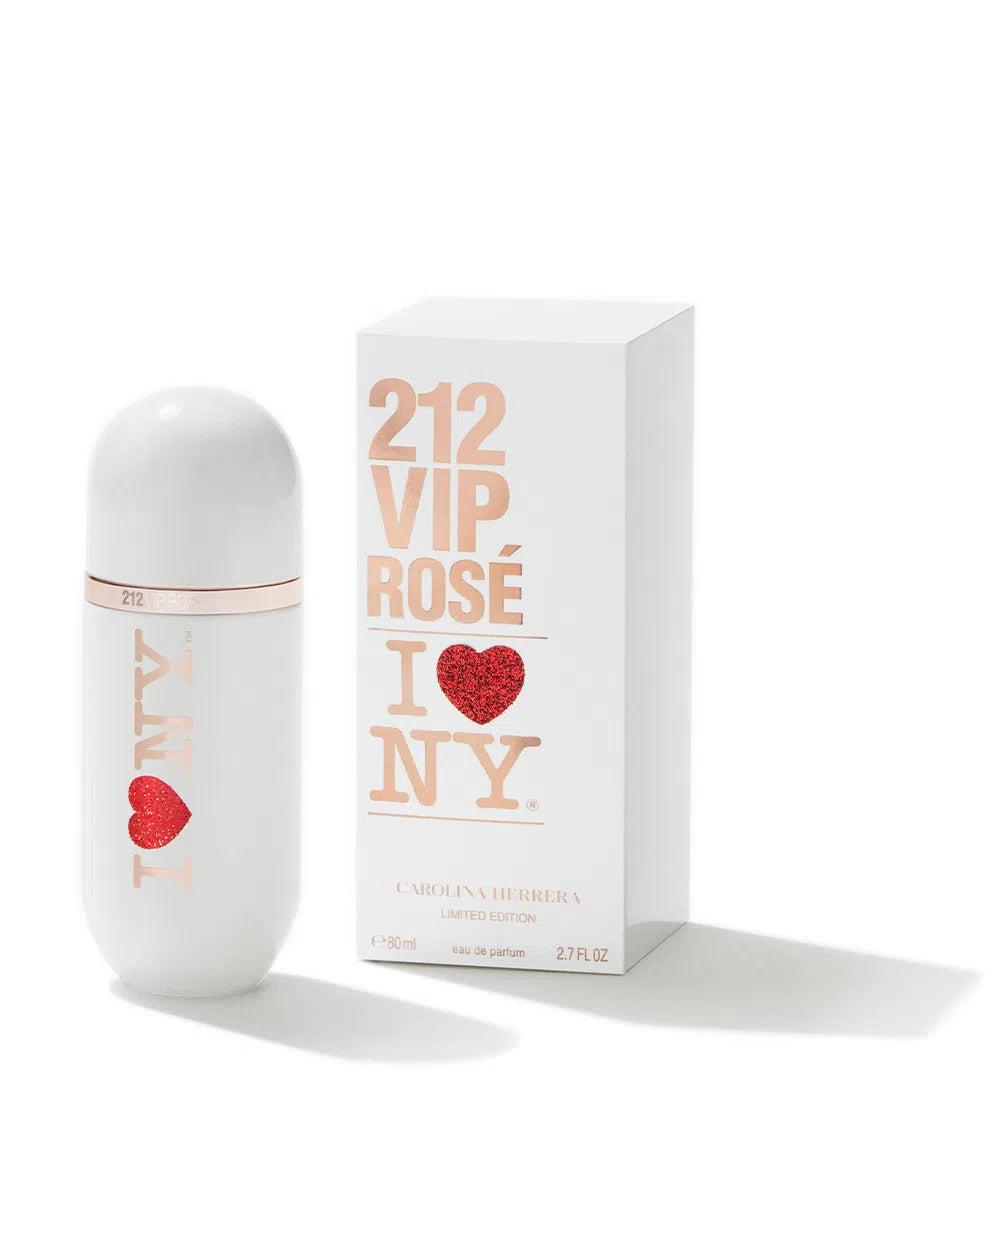 Perfume Mujer Carolina Herrera 212 VIP Rose Love NY, 80 ML EDP